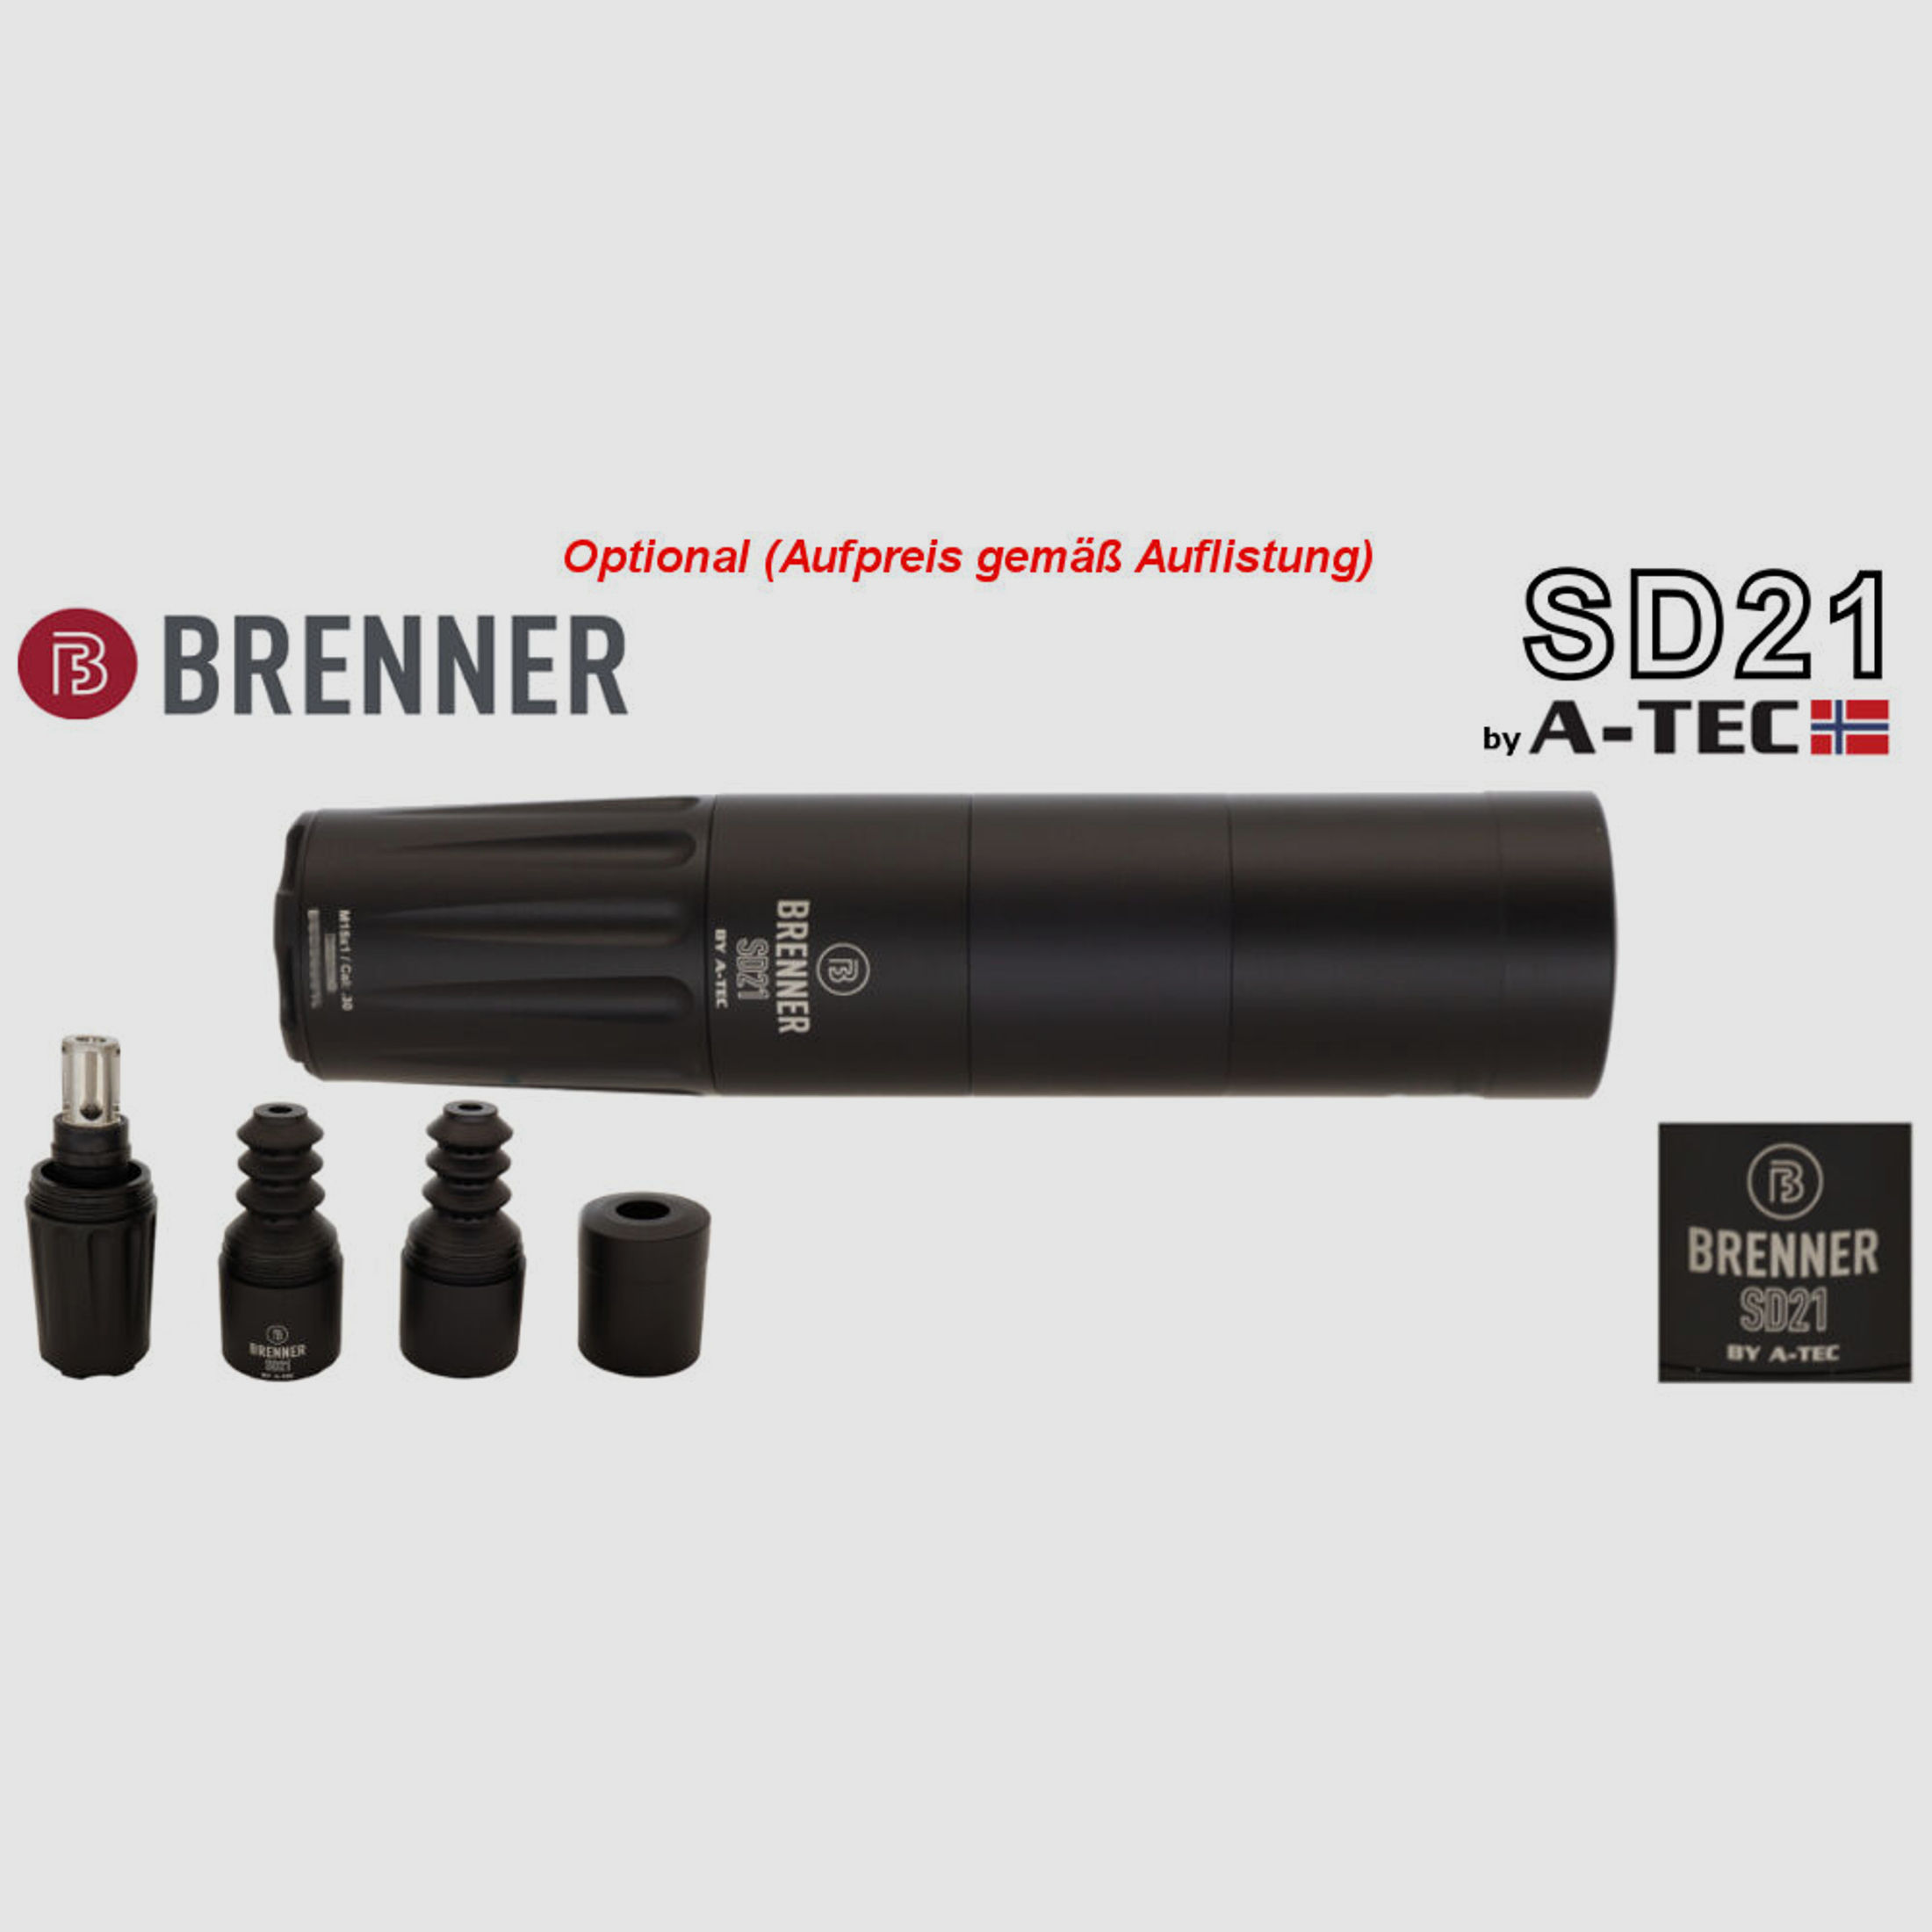 Brenner Komplettpaket:	 BR 20 B&H Prohunter Flex Lochschaft mit doppelter Verstellung inkl. Kahles Helia 2.4-12x56i fertig montiert Jagd Repetierer